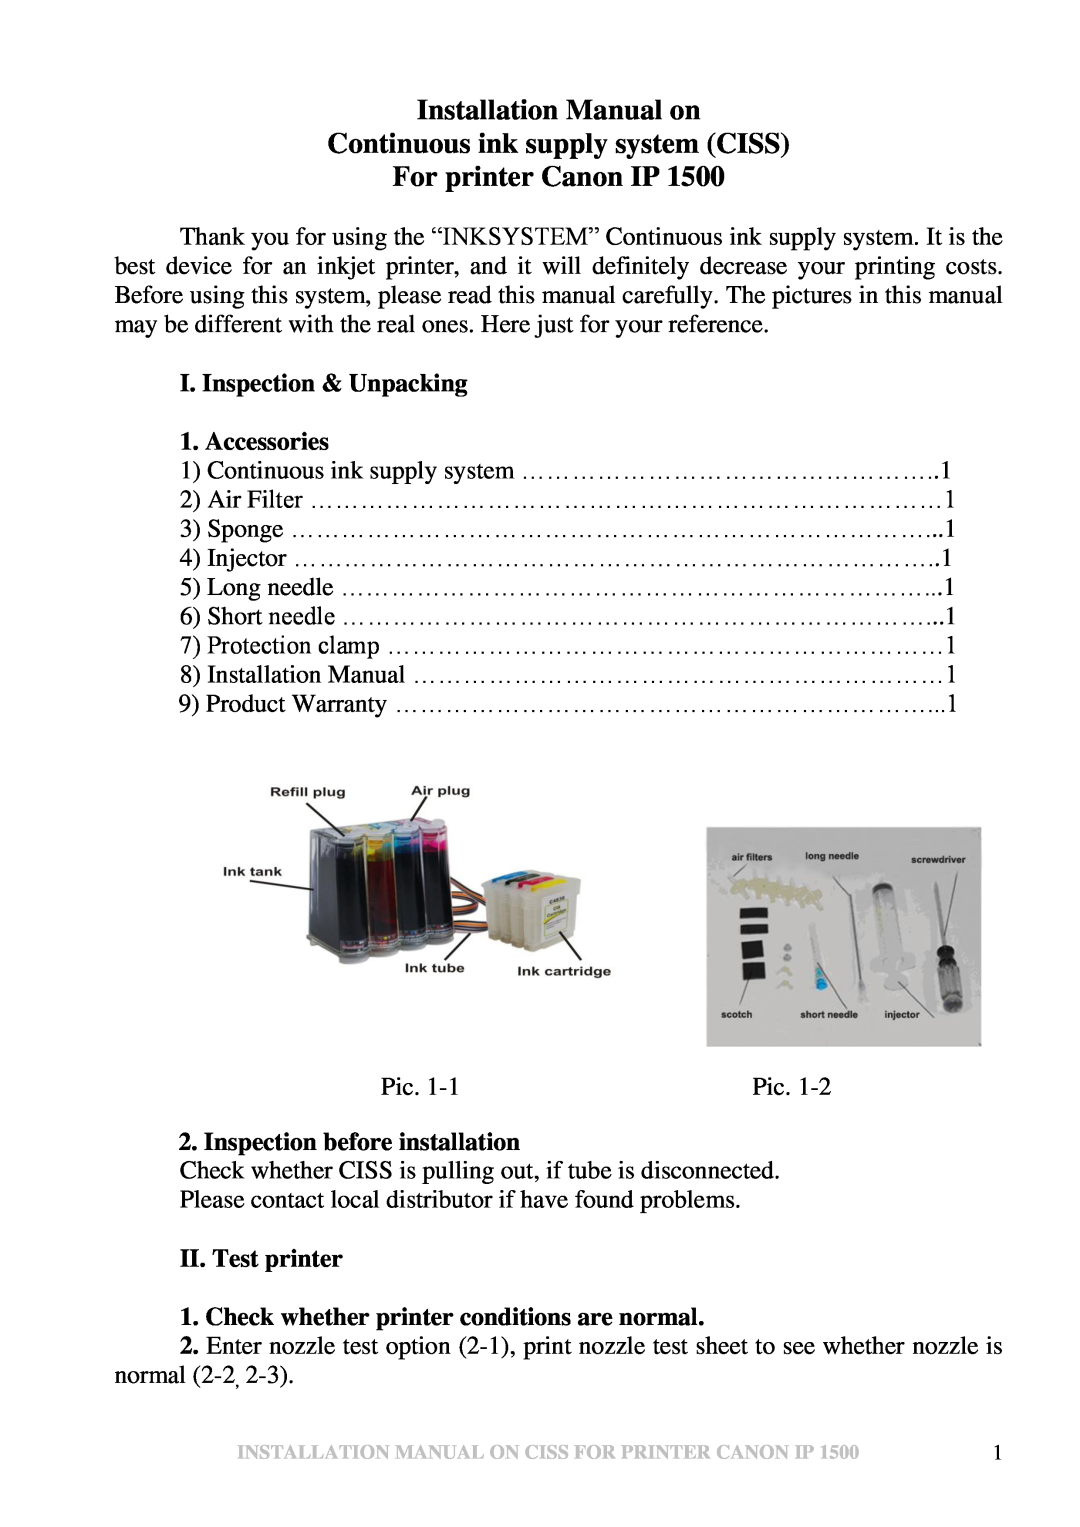 Canon IP 1500 installation manual I. Inspection & Unpacking 1. Accessories, Inspection before installation 